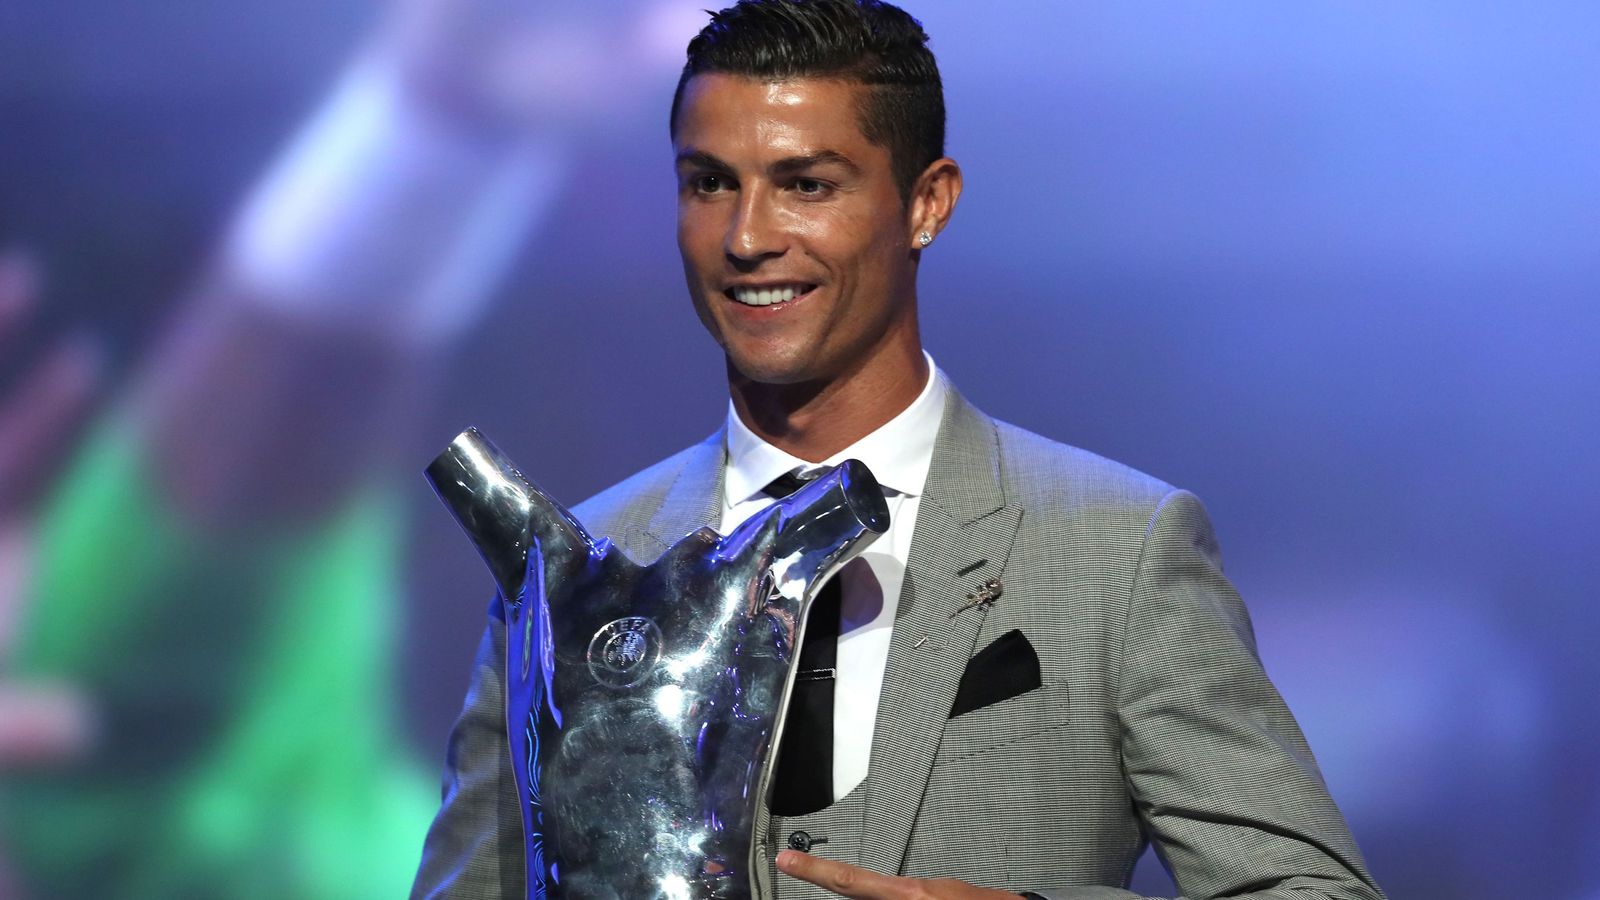 Cristiano Ronaldo wins UEFA Men's Player of the Year Award for 2016/17